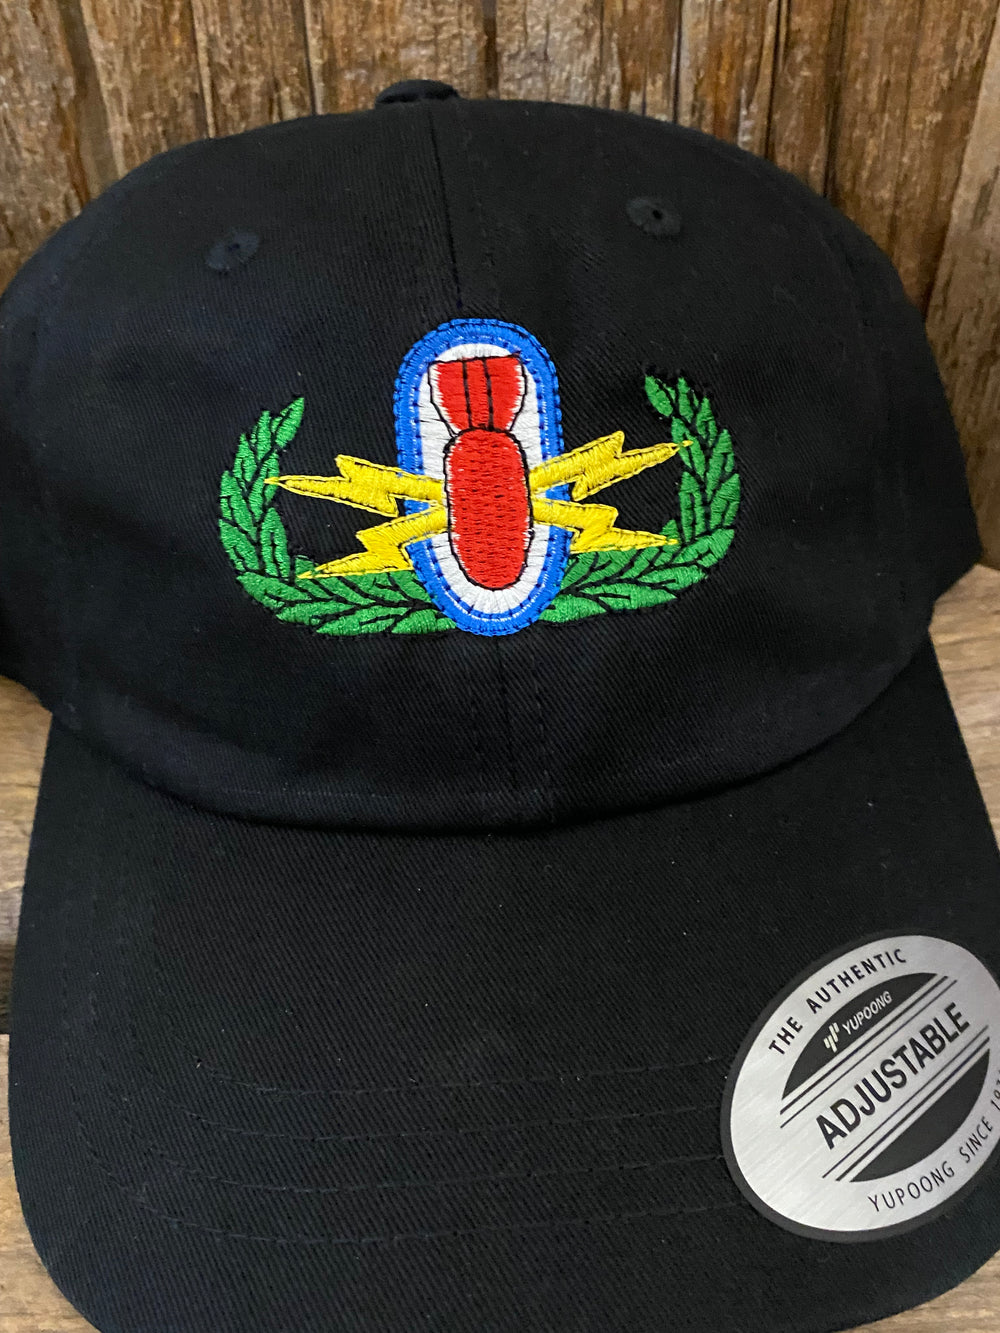 Full Color Badge Hat